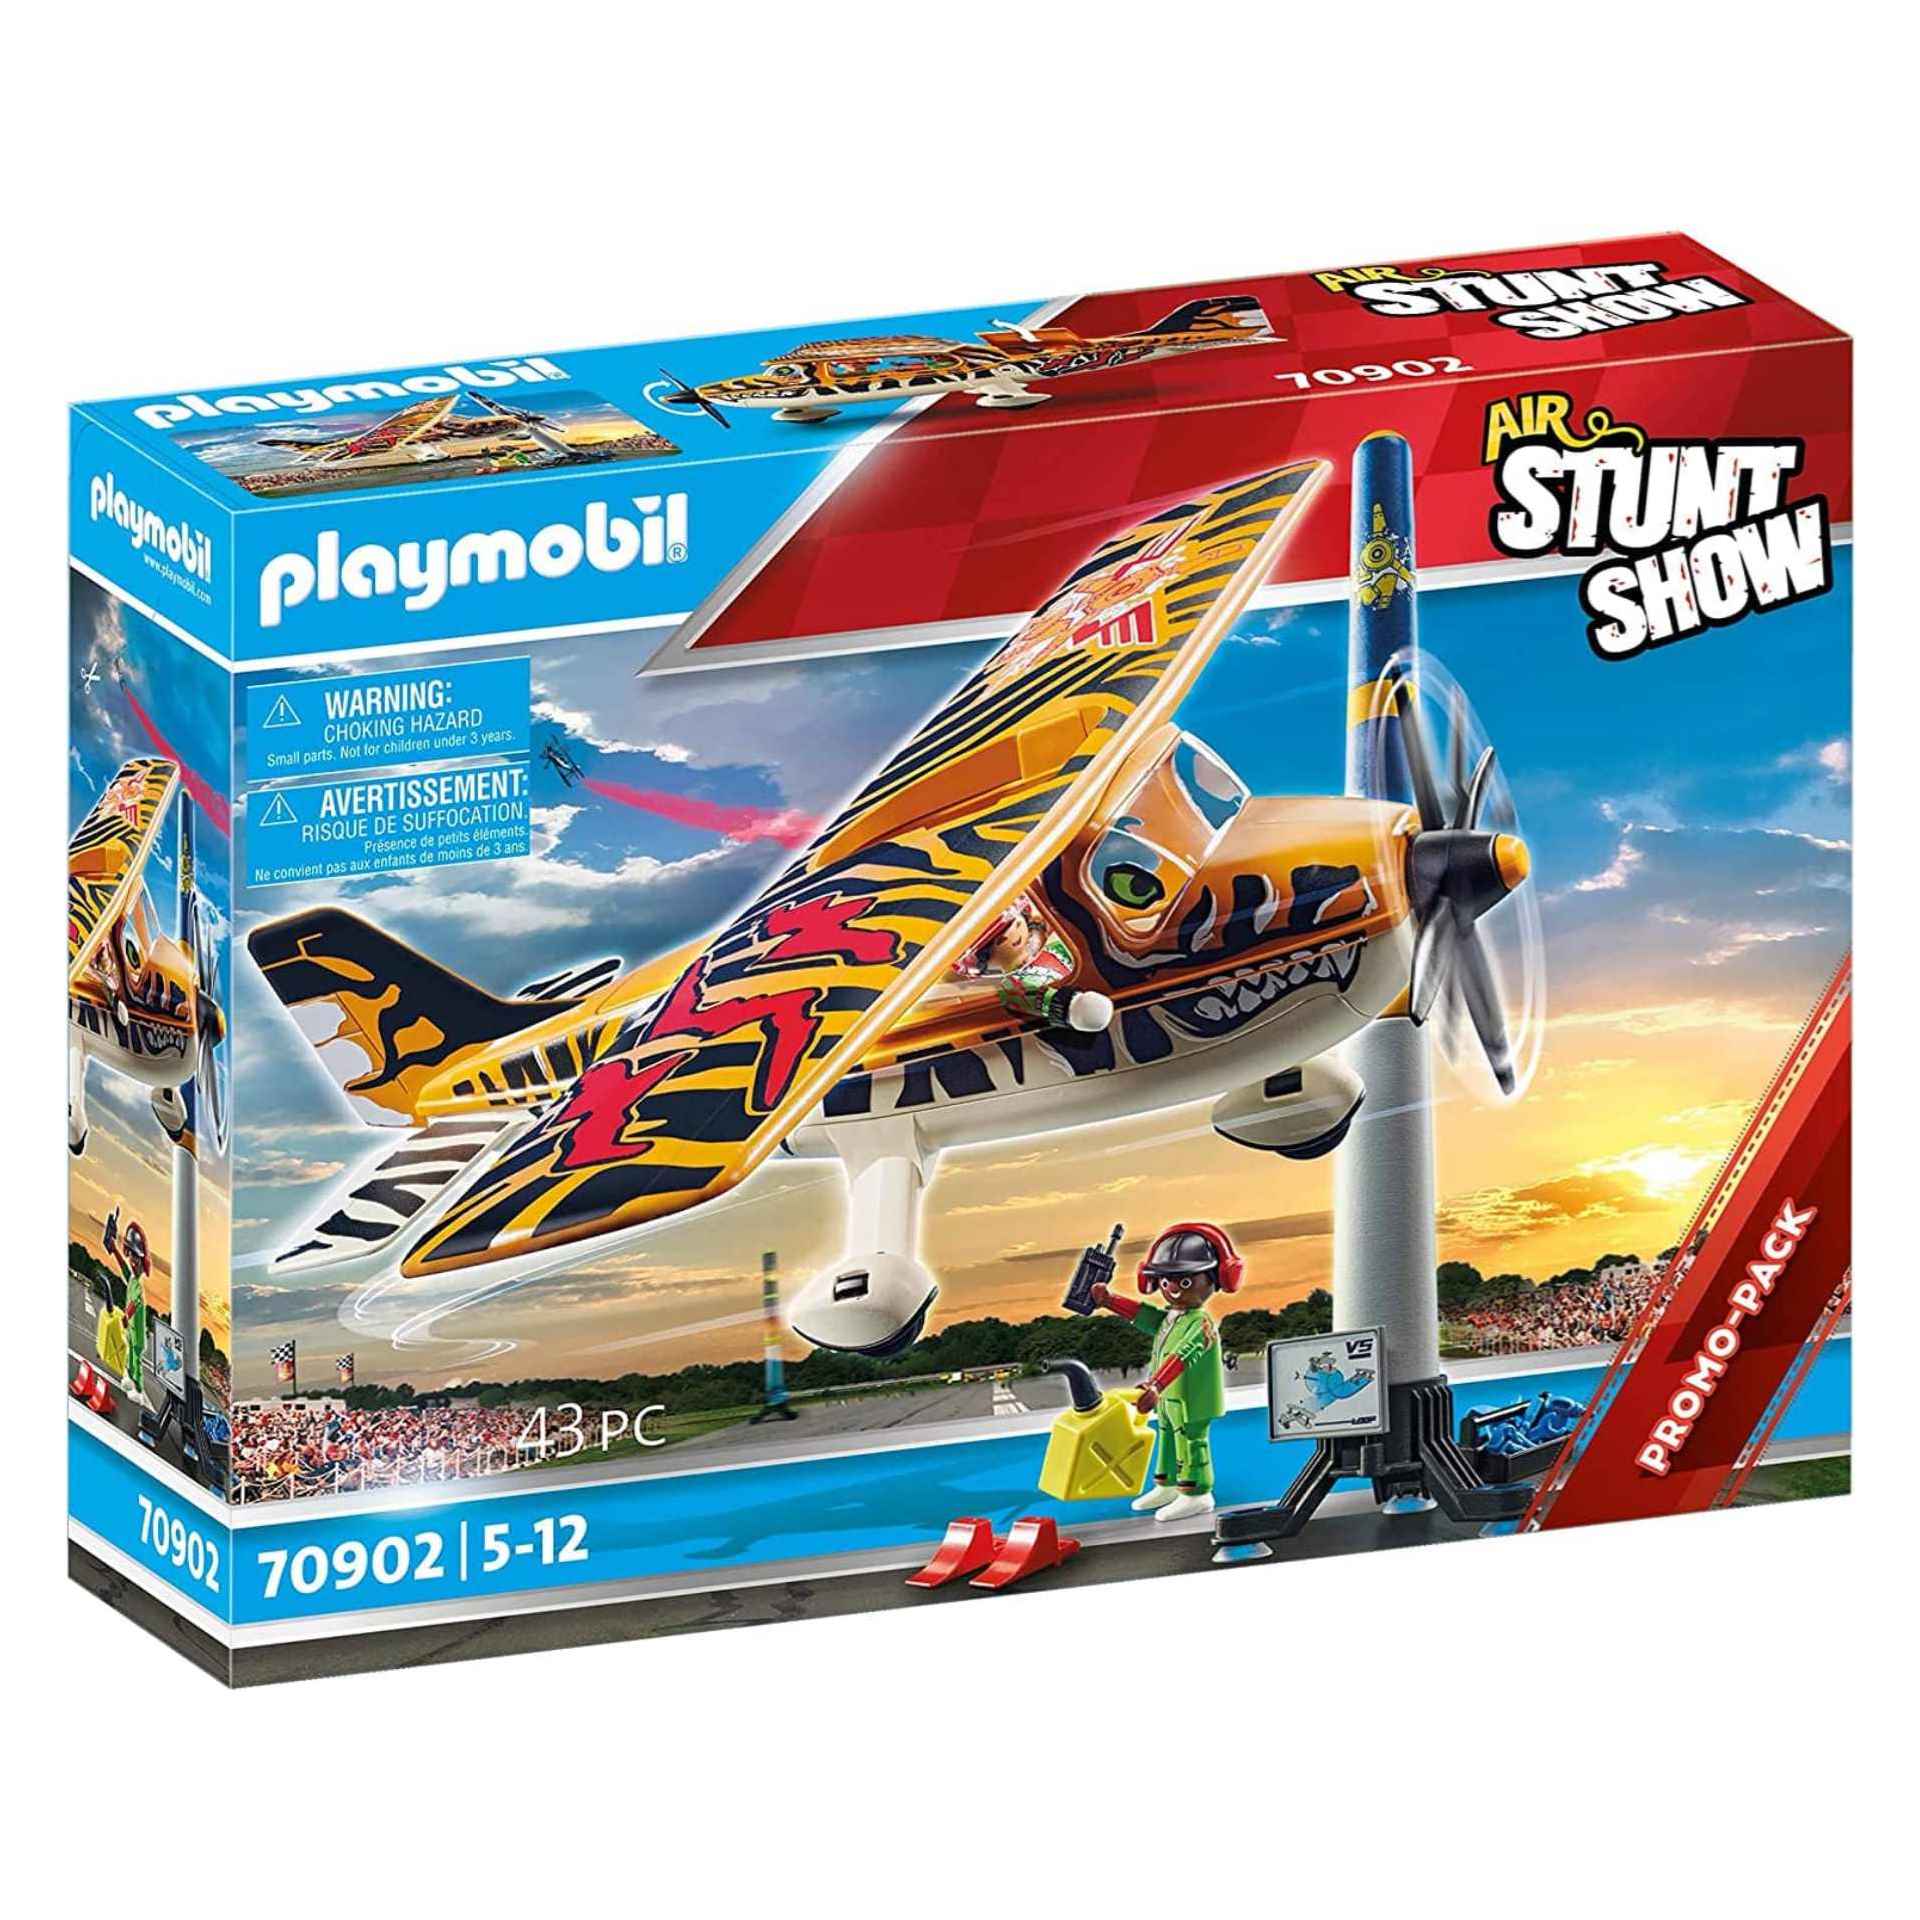 Playmobil Air Stuntshow Avioneta Tiger 70902 